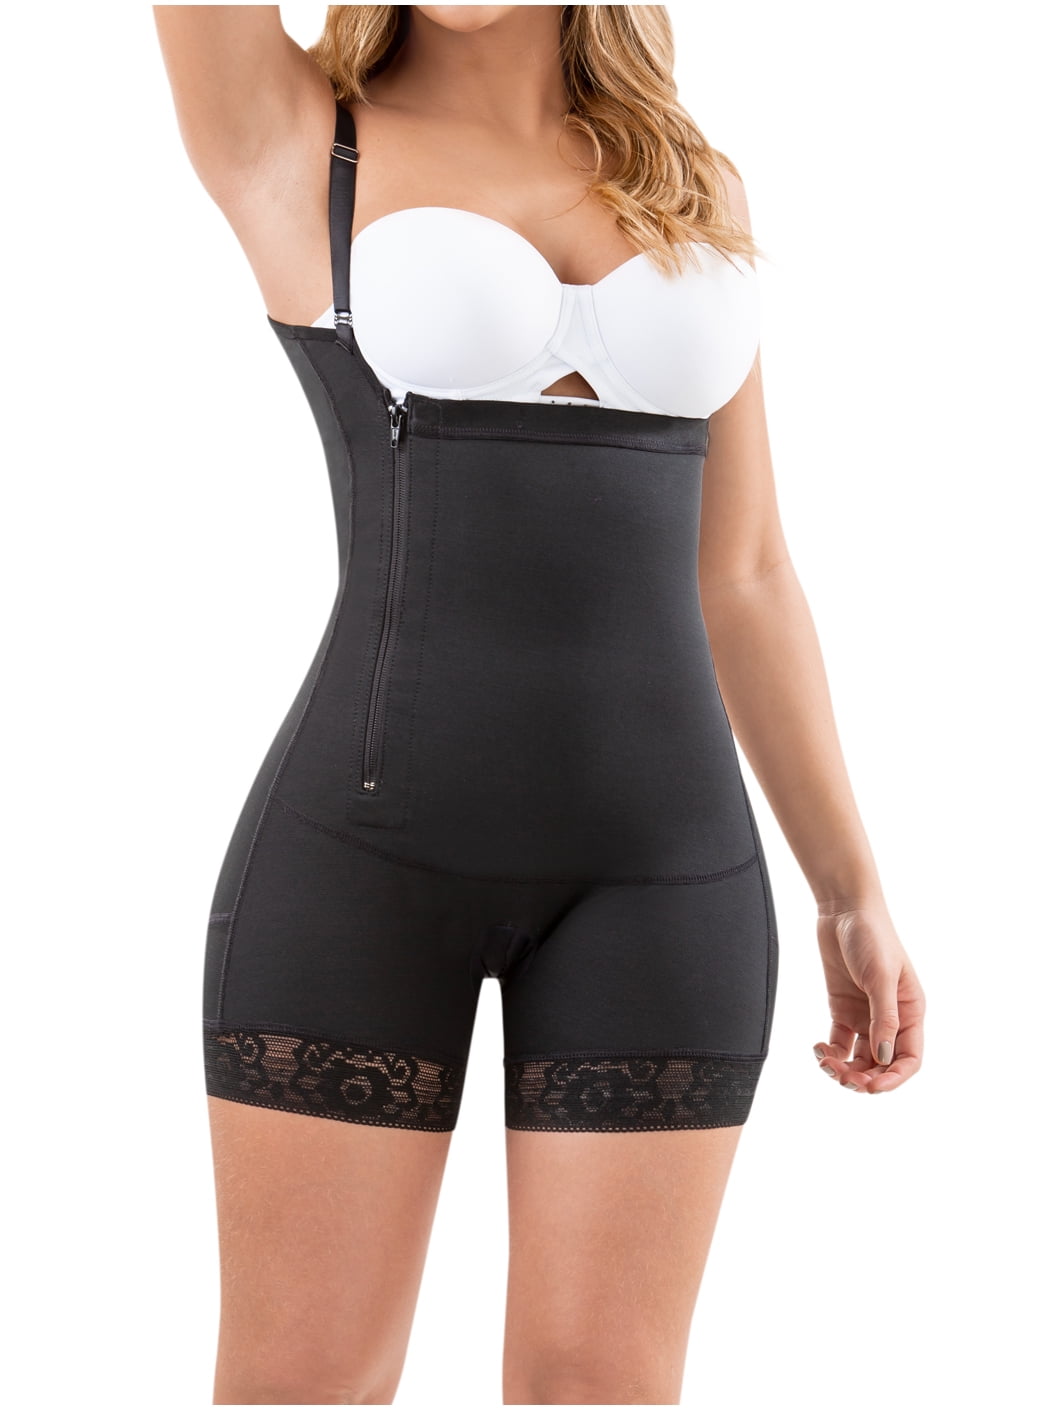  052 Full Body Shaper For Women Liposuction Compression  Garments Fajas Colombianas Reductoras Y Moldeadora Para Mujer Faja Lipo  Stage 2 Postparto Beige XL